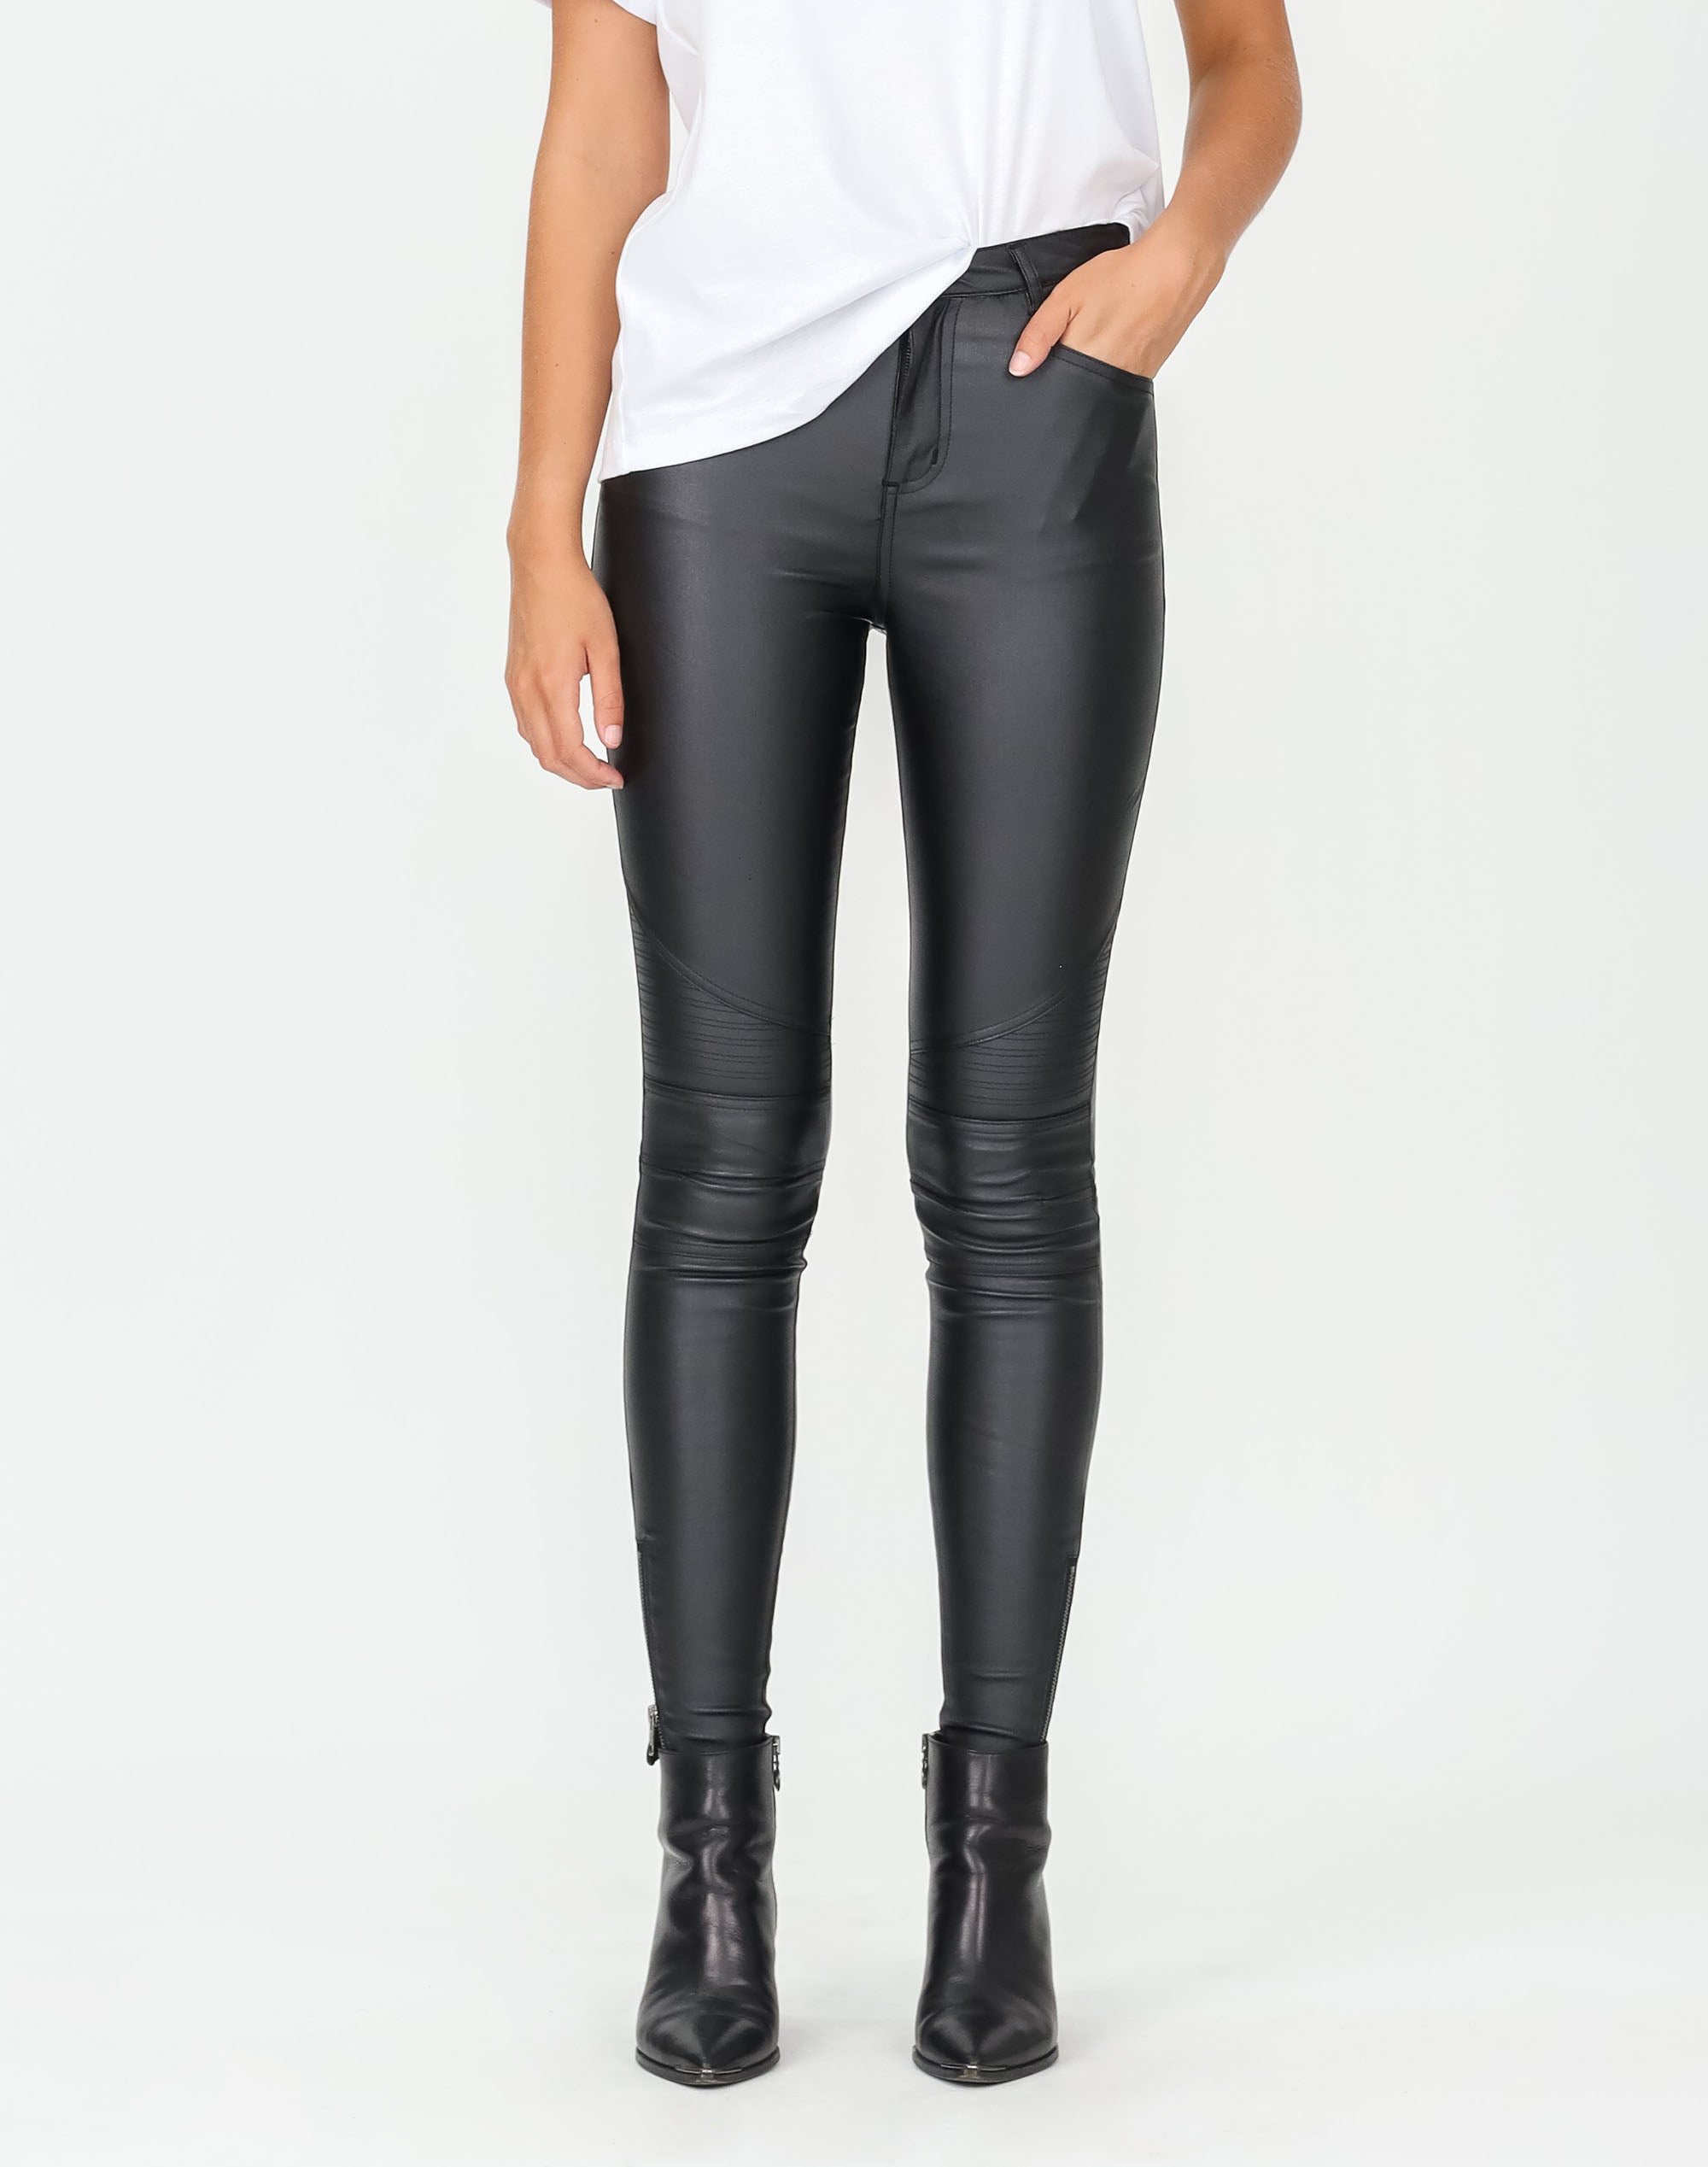 Zip Leg Leather Look Pant Black Pants Full Length Women's, 42% OFF